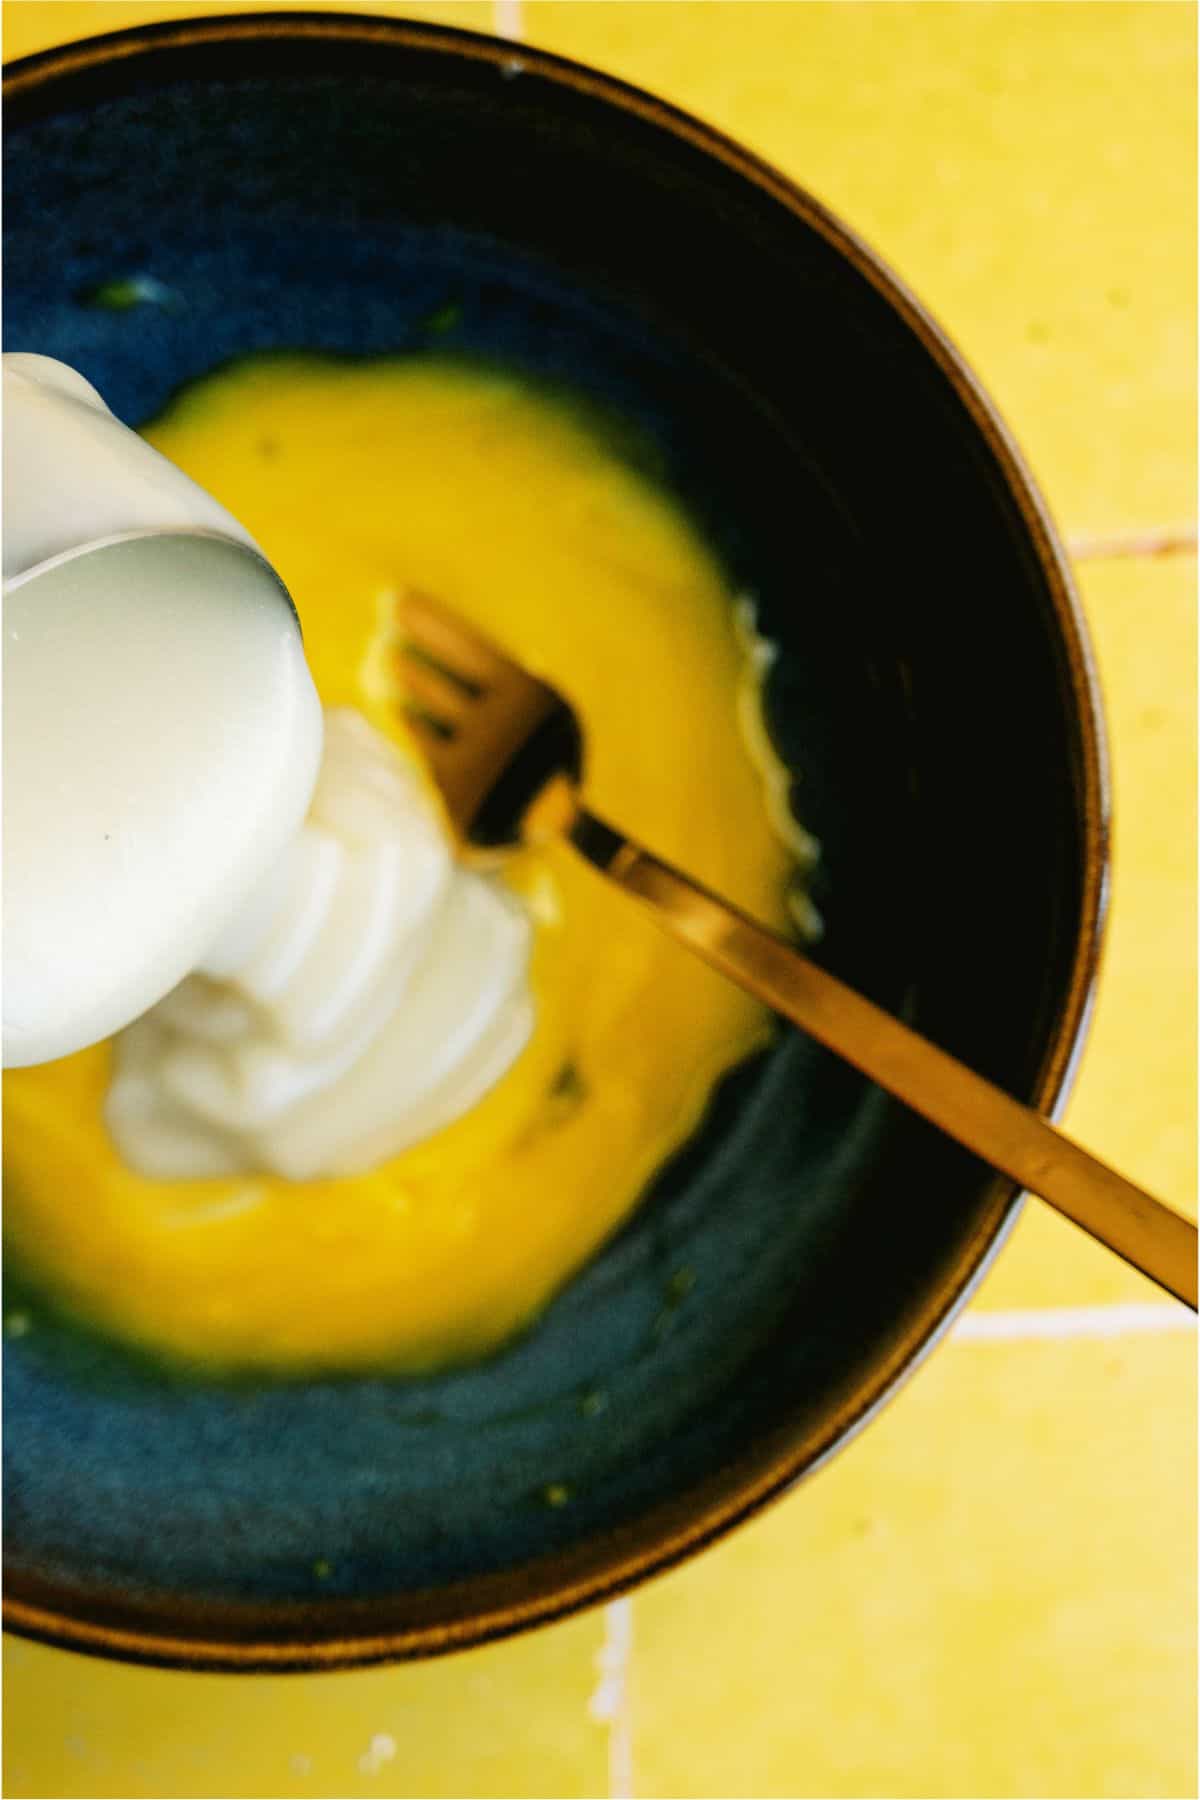 Adding milk in to saucepan to create lemon mixture